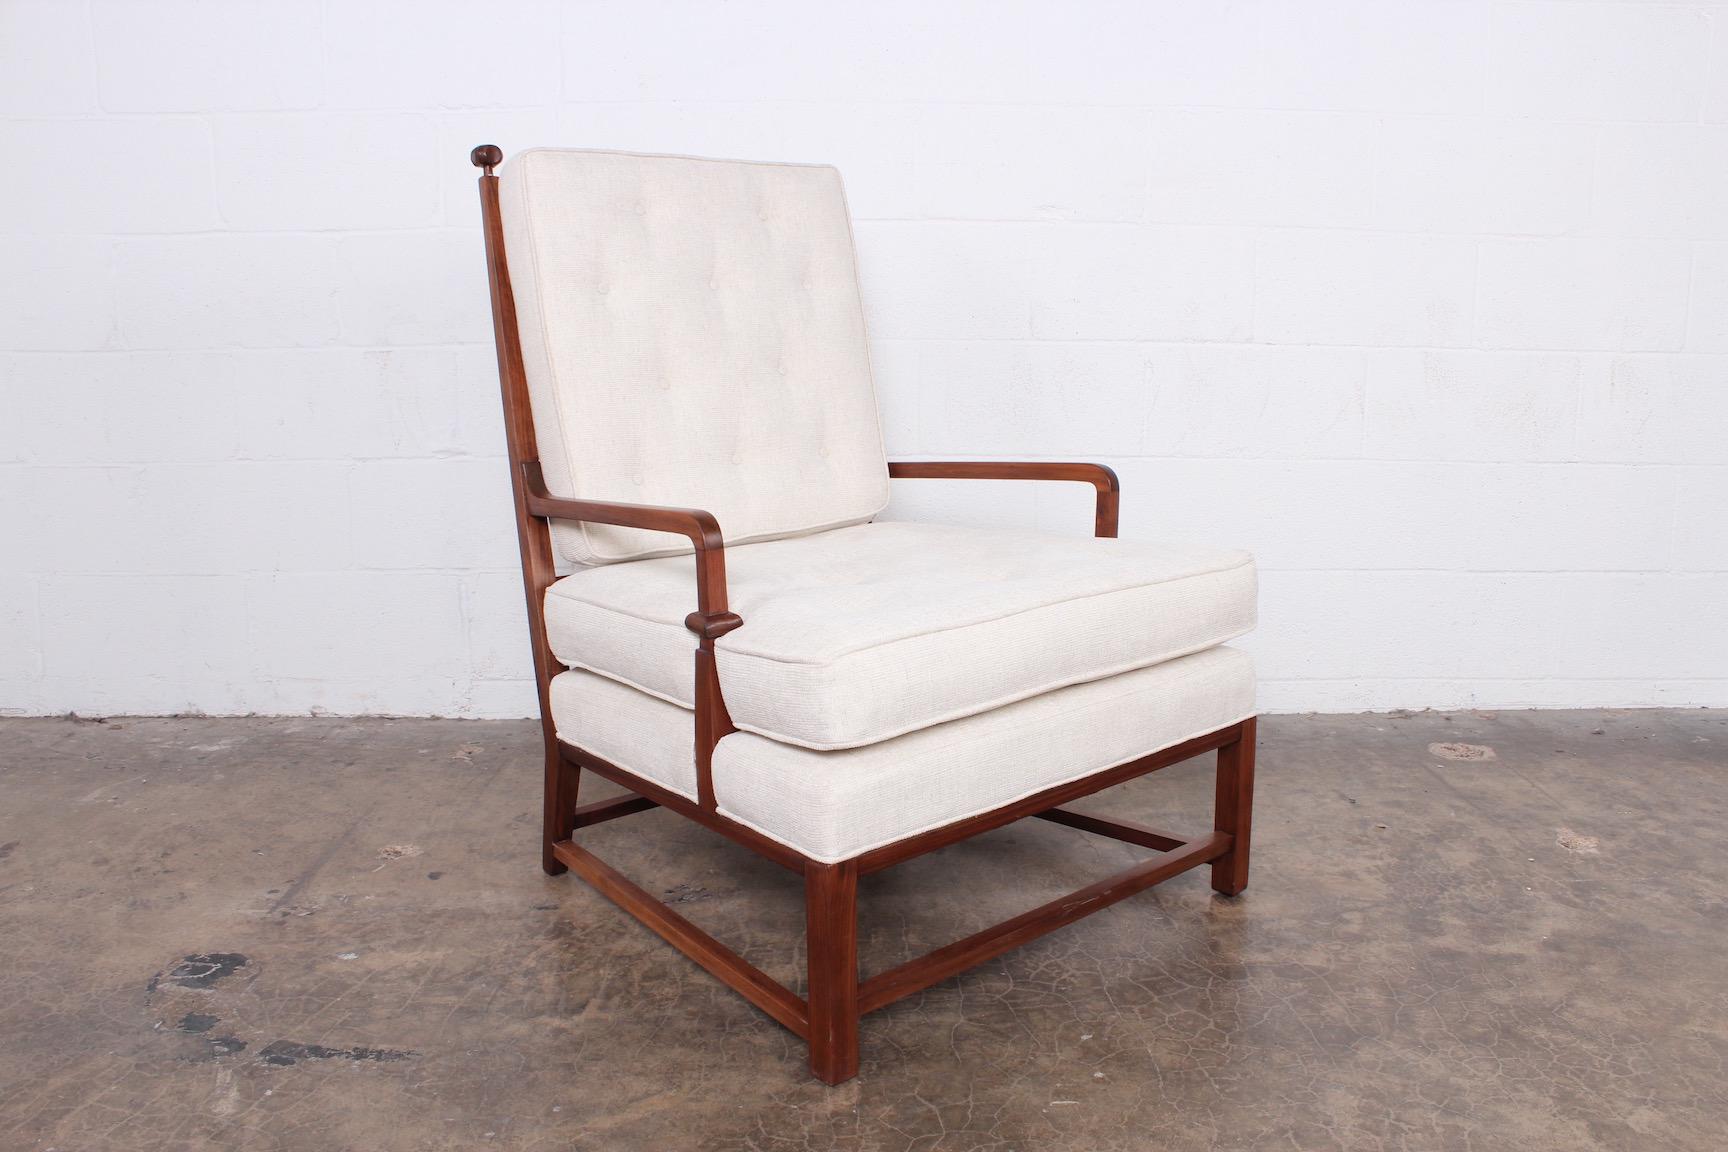 A rare mahogany throne chair designed by Tommi Parzinger for Parzinger originals.
    